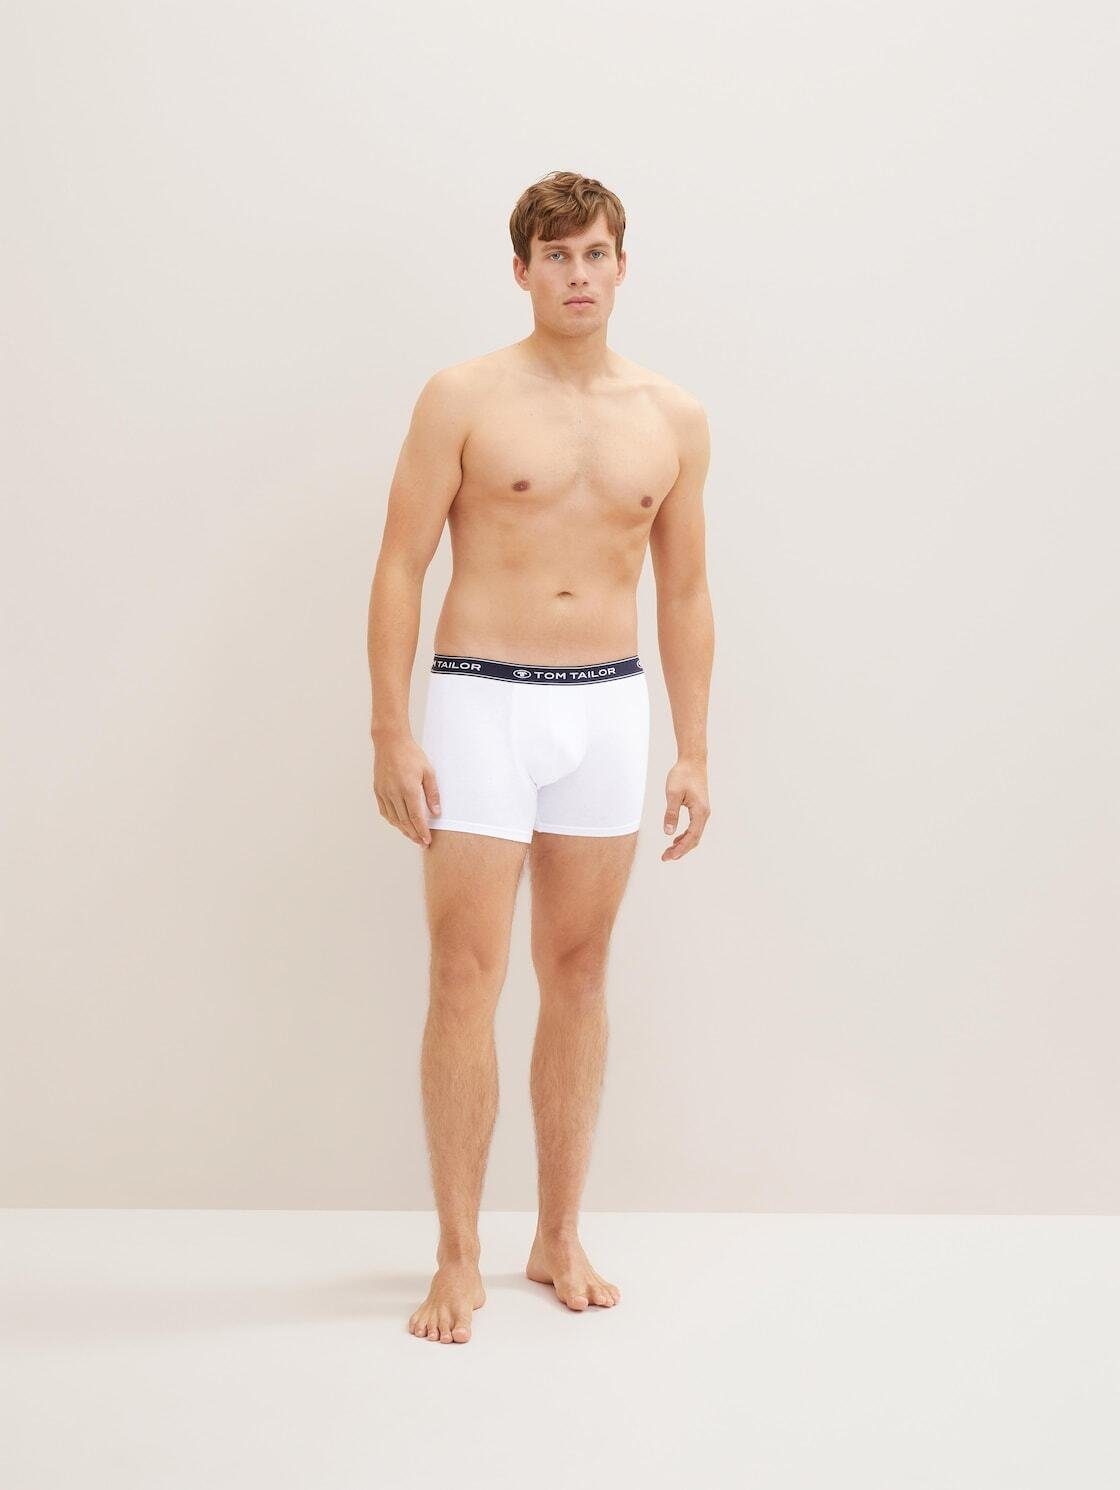 navy-melange-white im TAILOR Webbund Long Dreierpack) Pants Boxershorts (im Dreierpack TOM mit